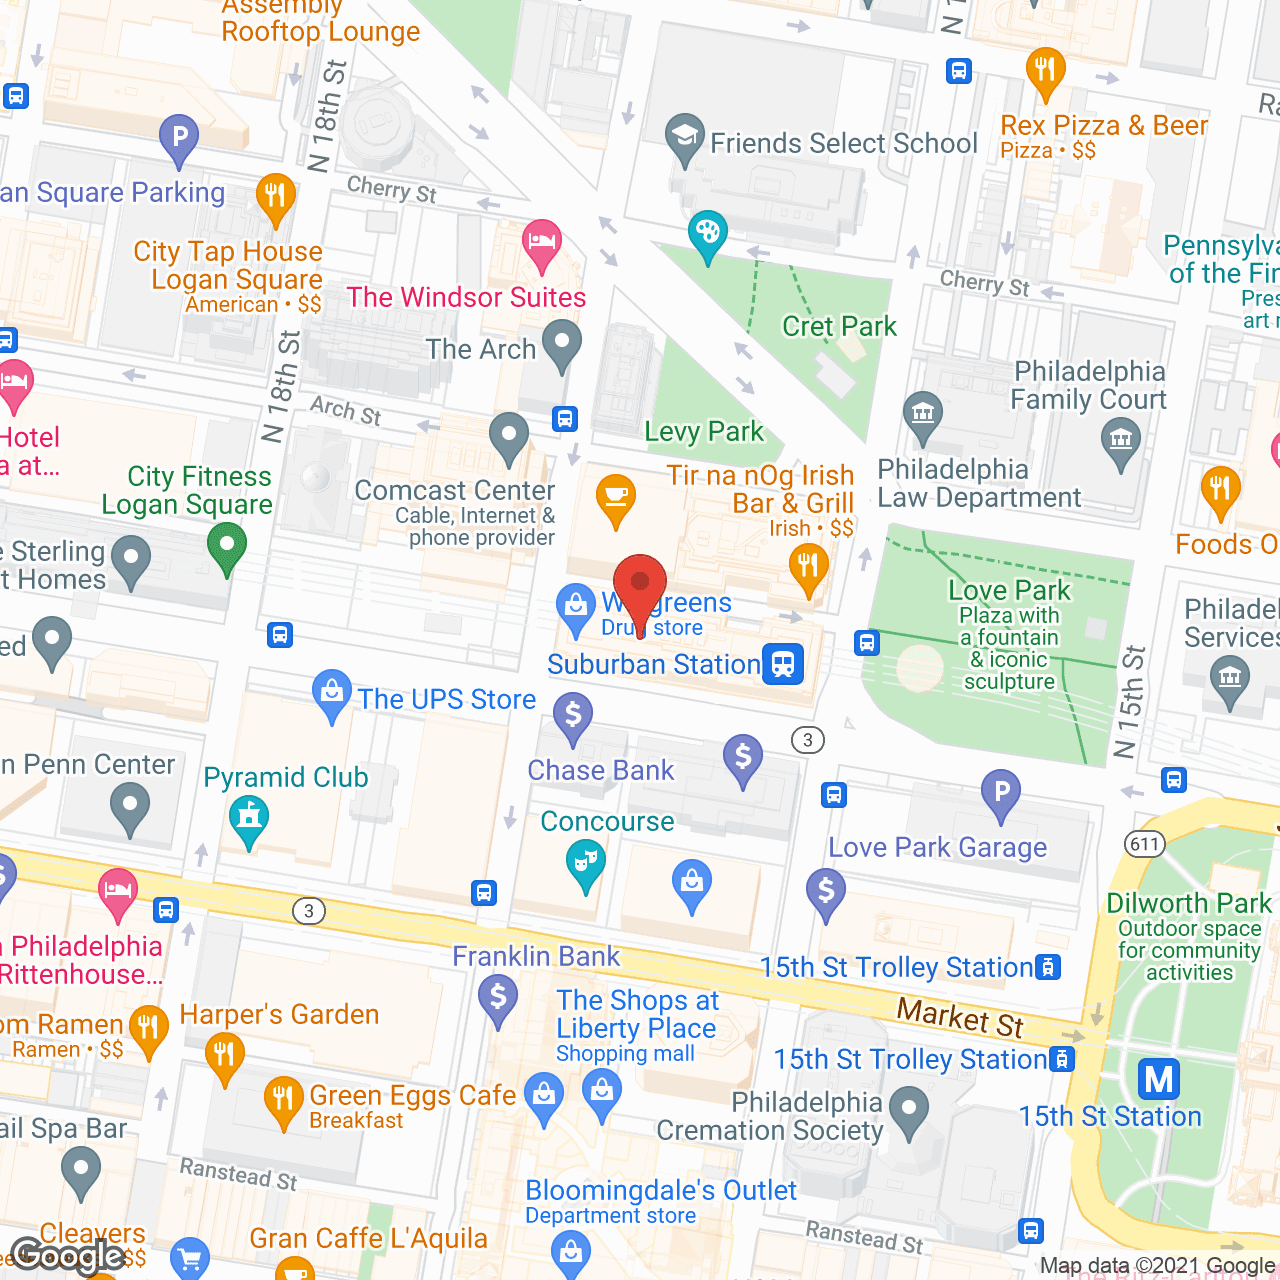 Assisting Hands of Philadelphia in google map